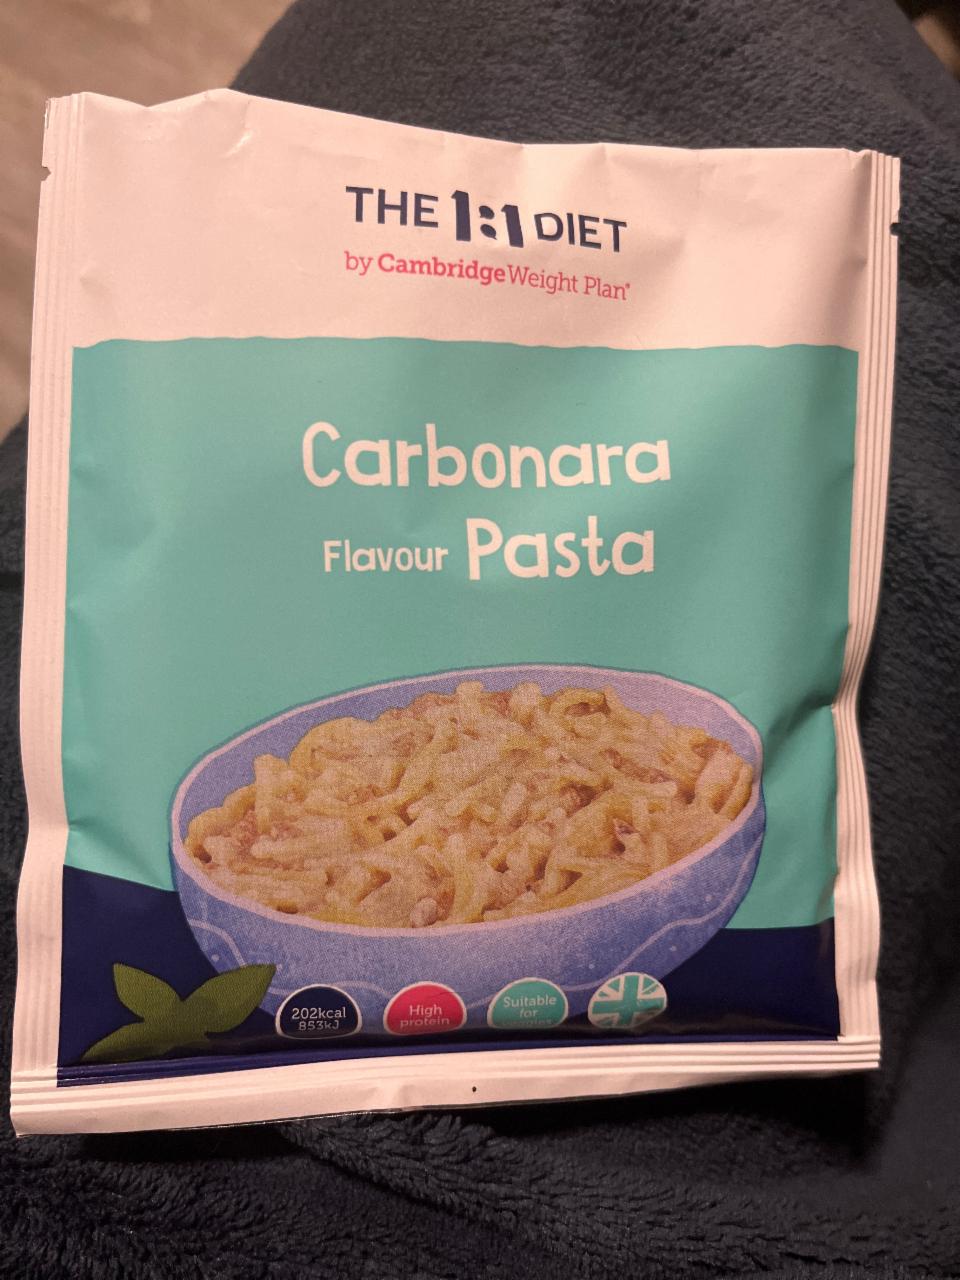 Fotografie - Carbonara flavour pasta The 1:1 diet